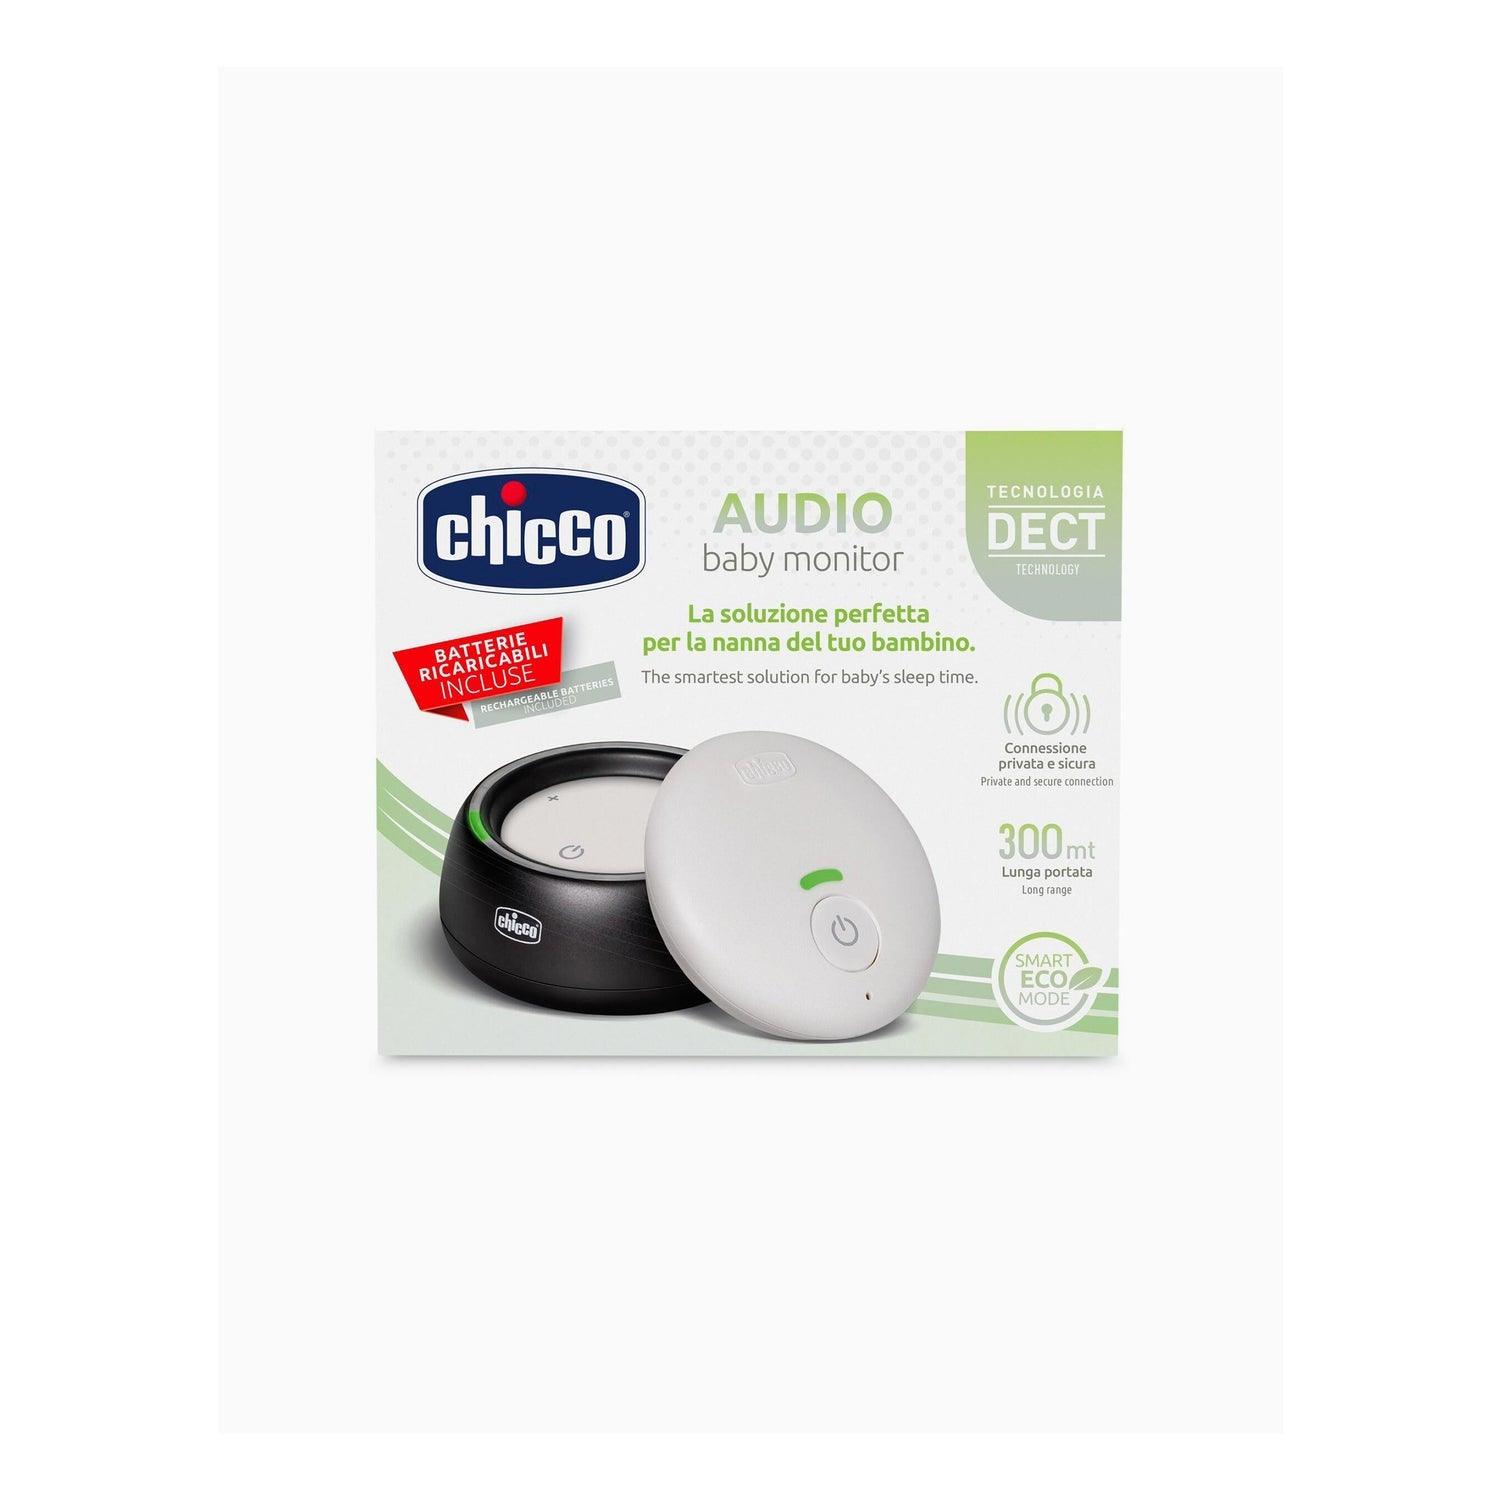 Chicco - Chicco Audio baby monitor - Mari Kali Stores Cyprus